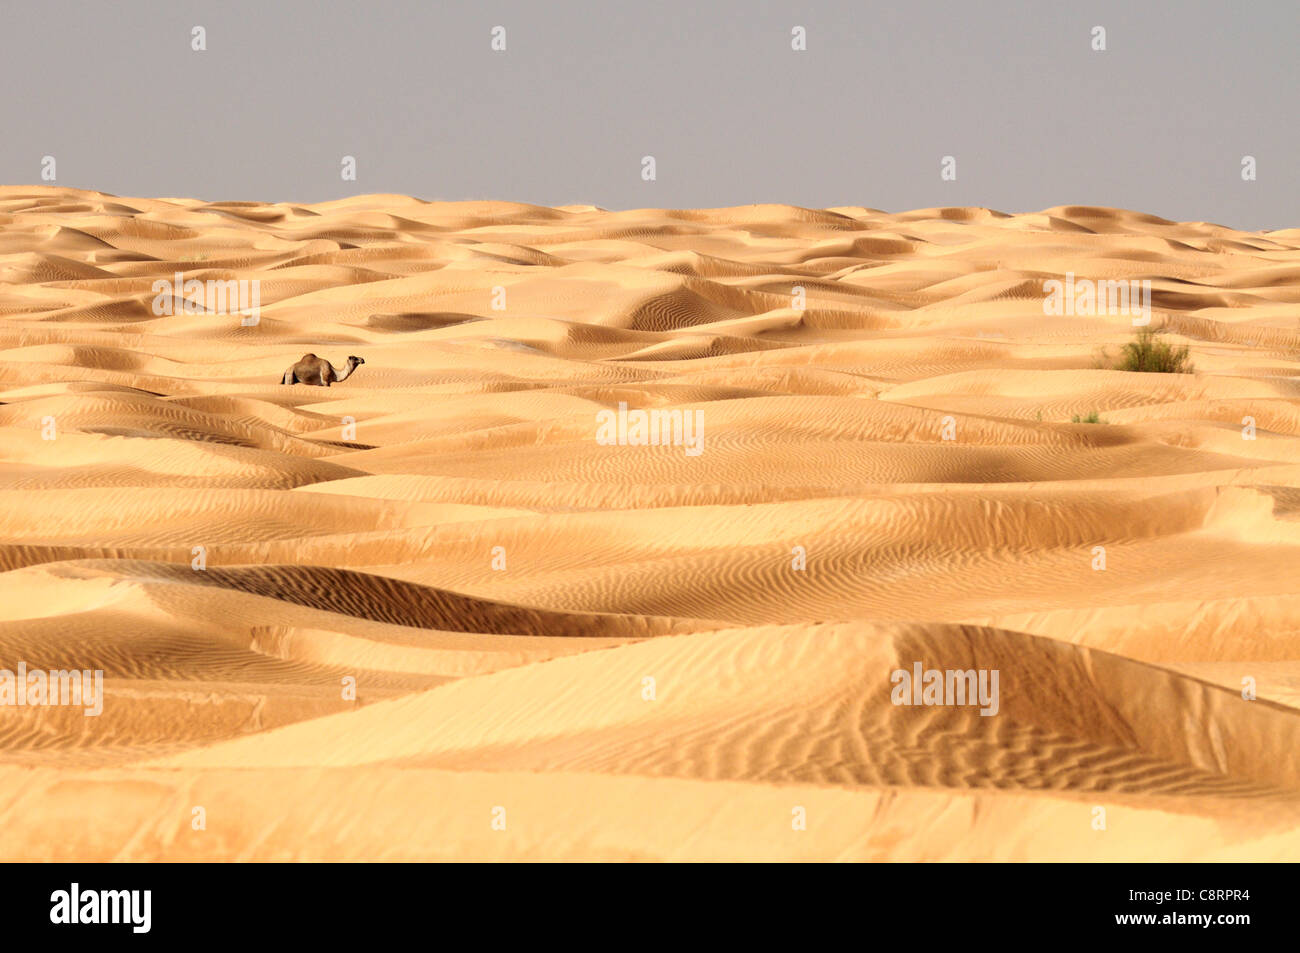 Africa, Tunisia, nr. Tembaine. Camel within the desert dunes of the Grand Erg Oriental in the Sahara desert. Stock Photo